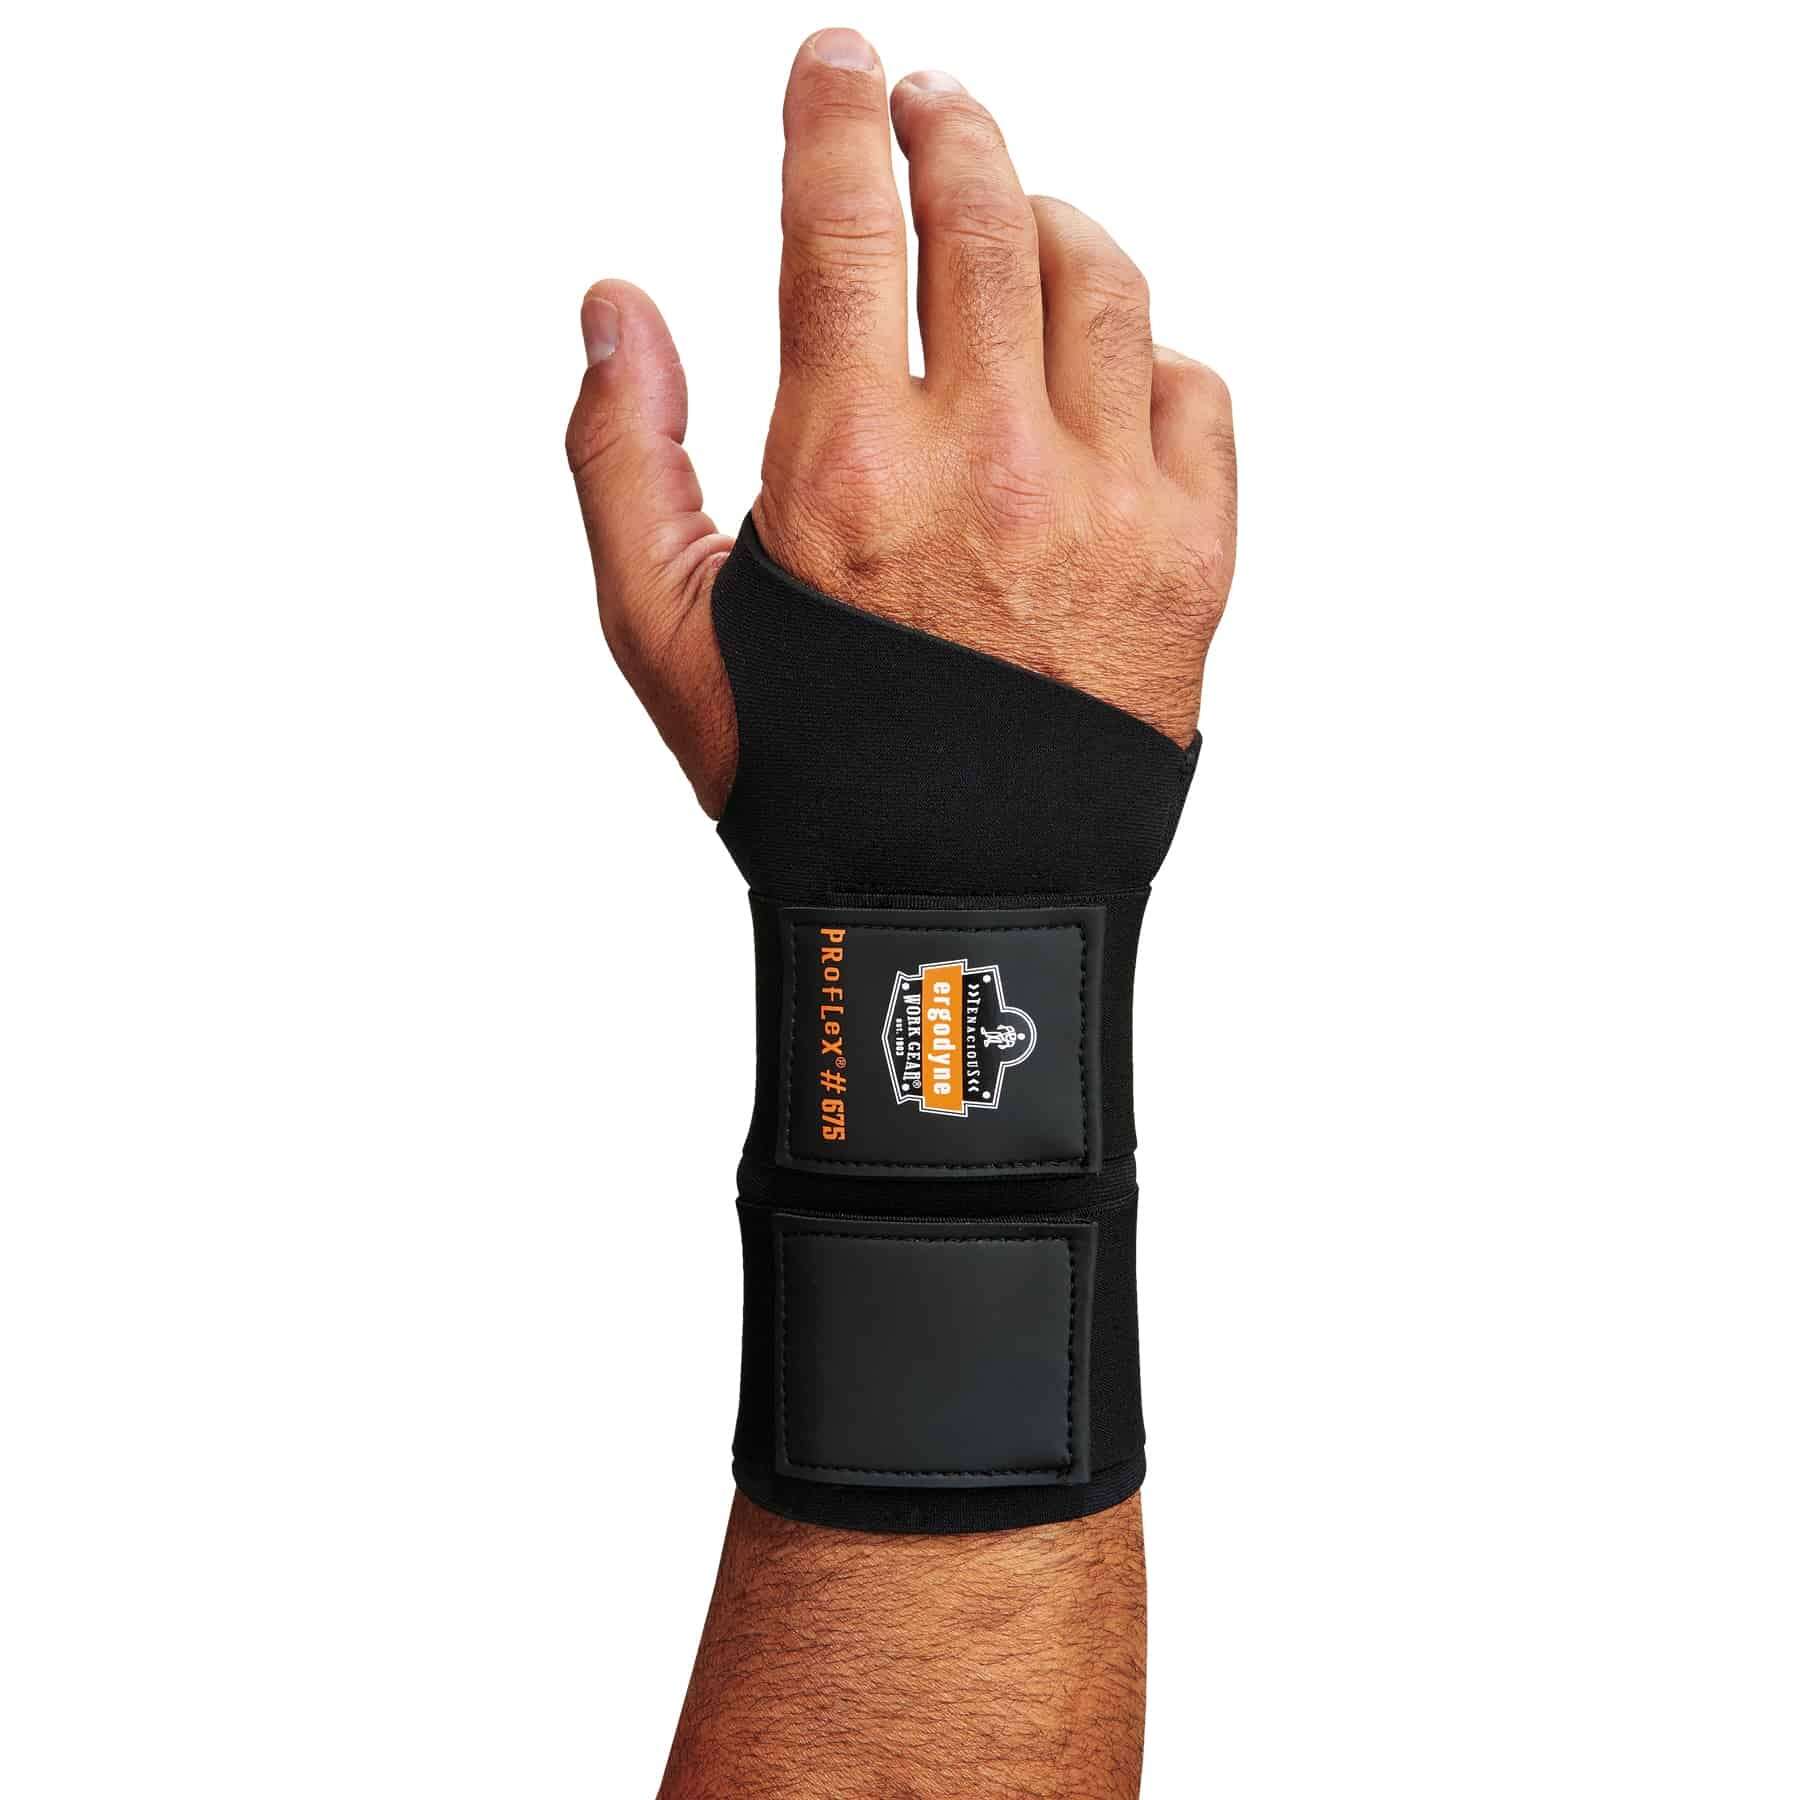 Ambidextrous Double Strap Wrist Support